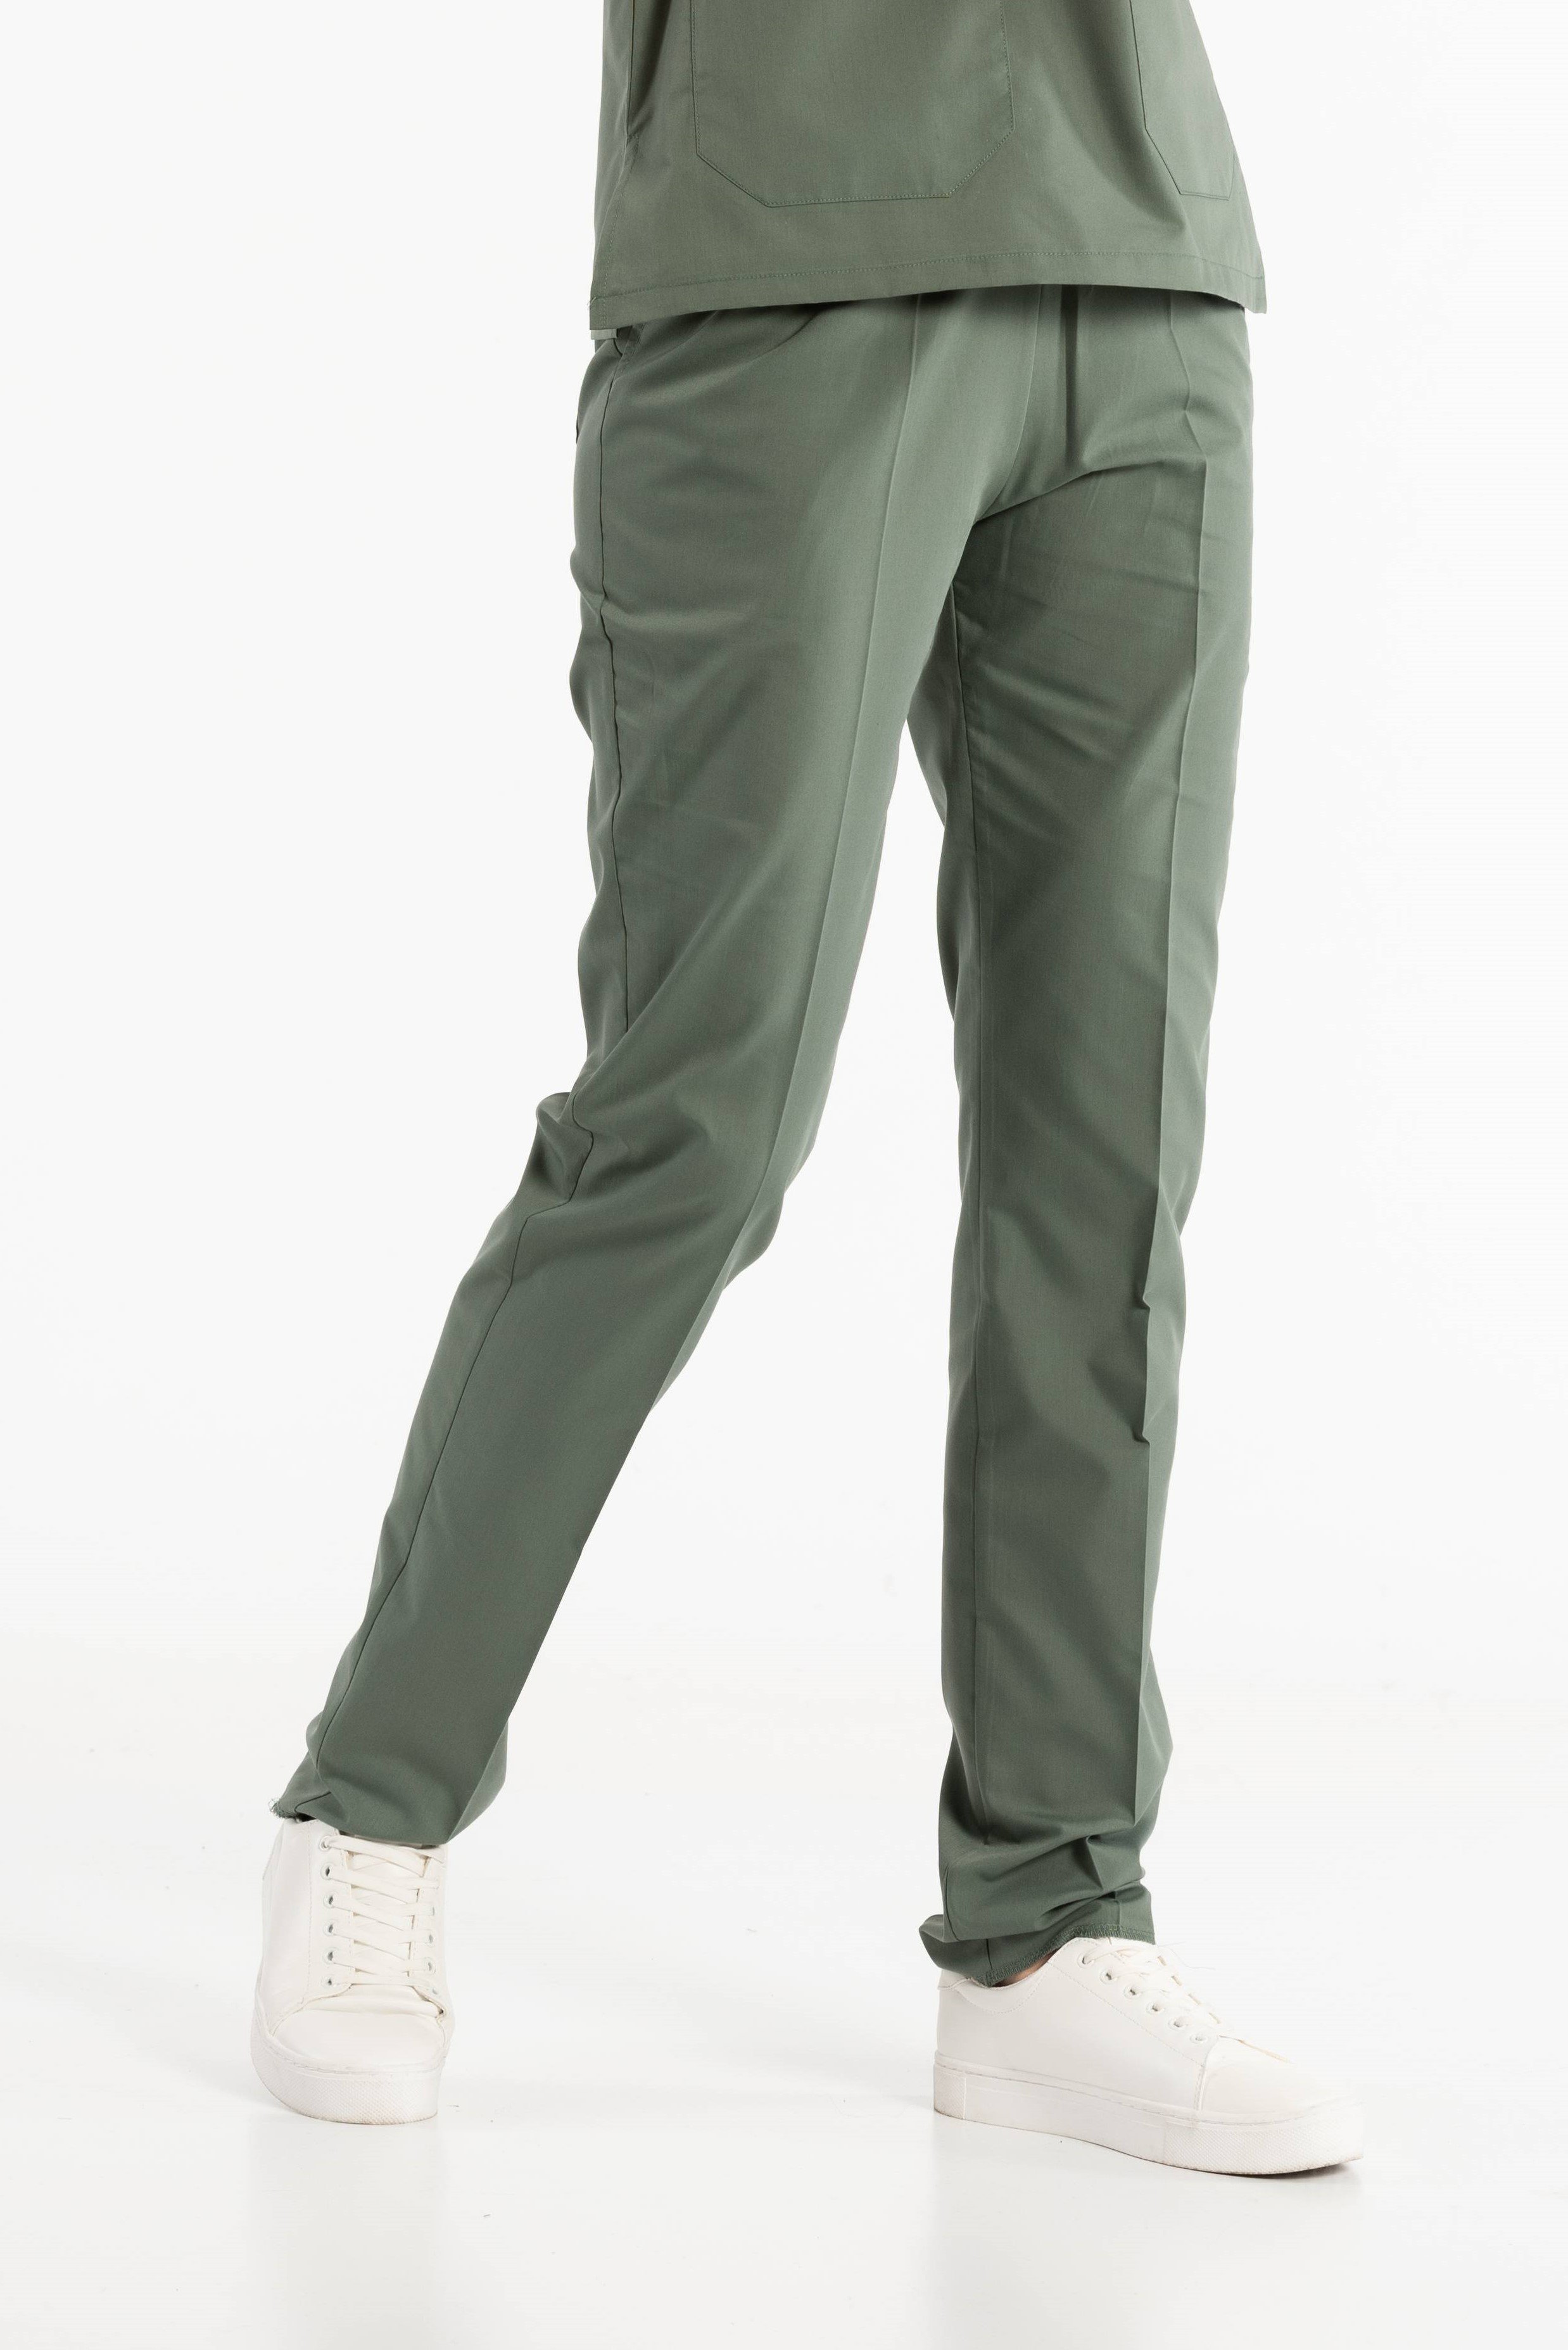 Asker Yeşili Cerrahi Pantolon